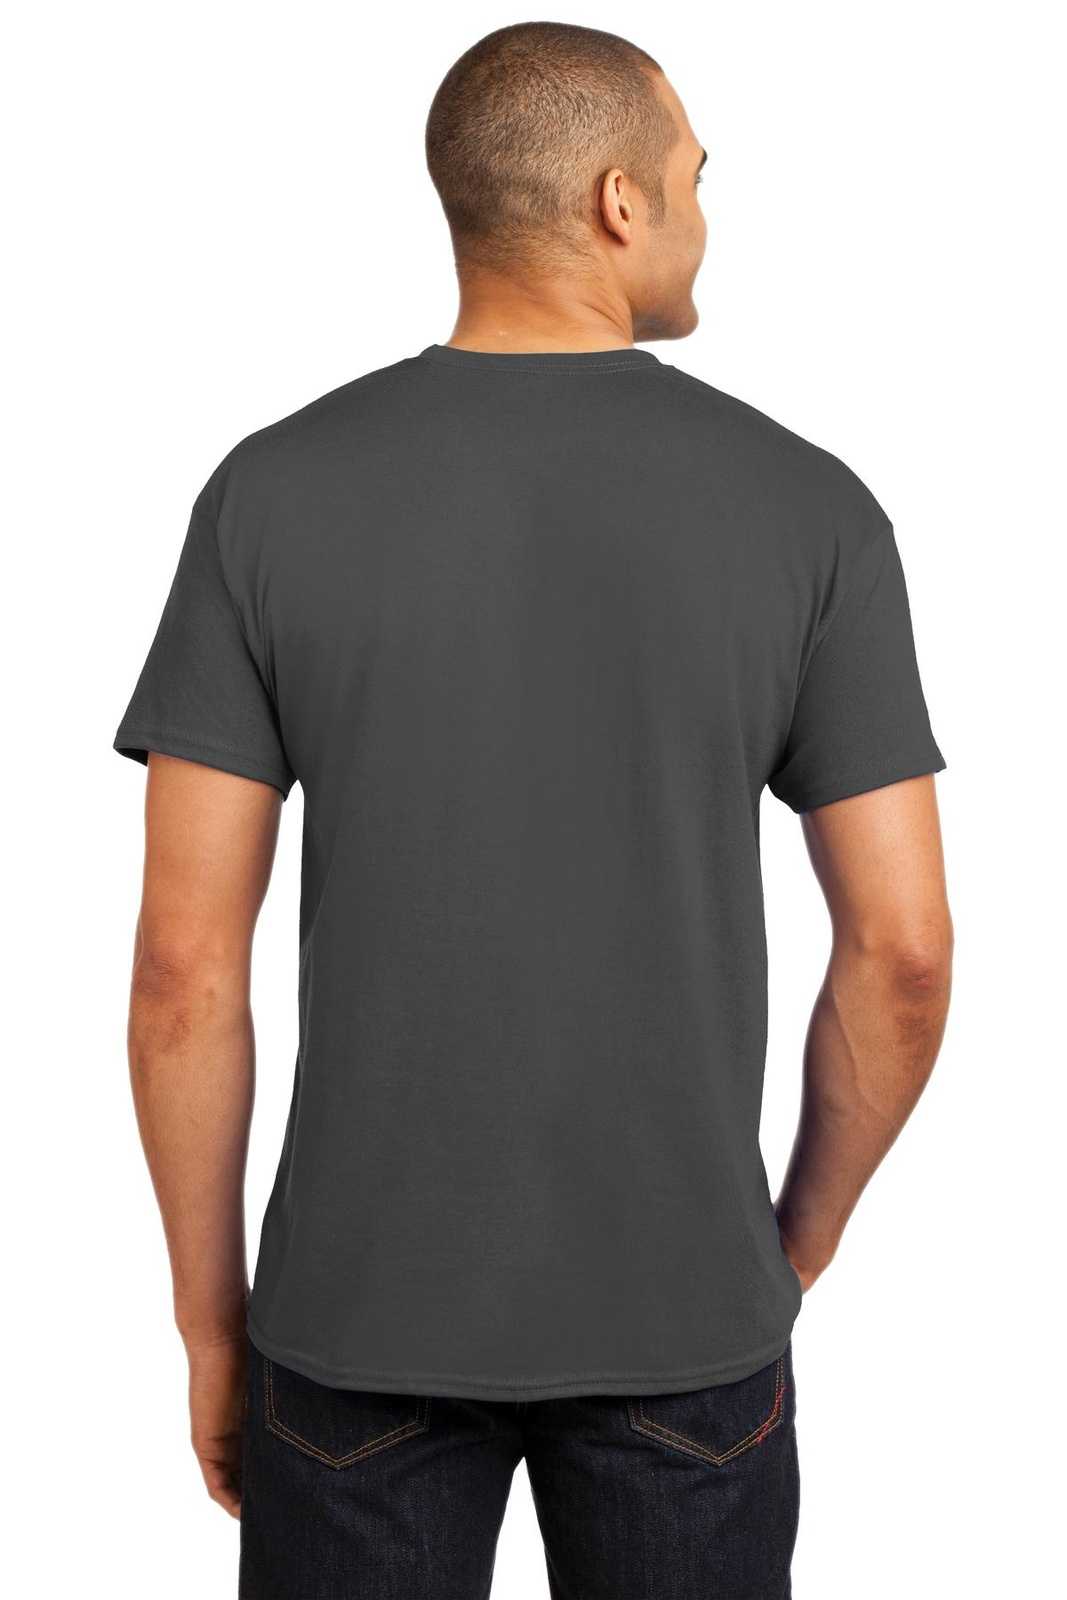 Hanes 5170 EcoSmart 50/50 Cotton/Poly T-Shirt - Smoke Gray - HIT a Double